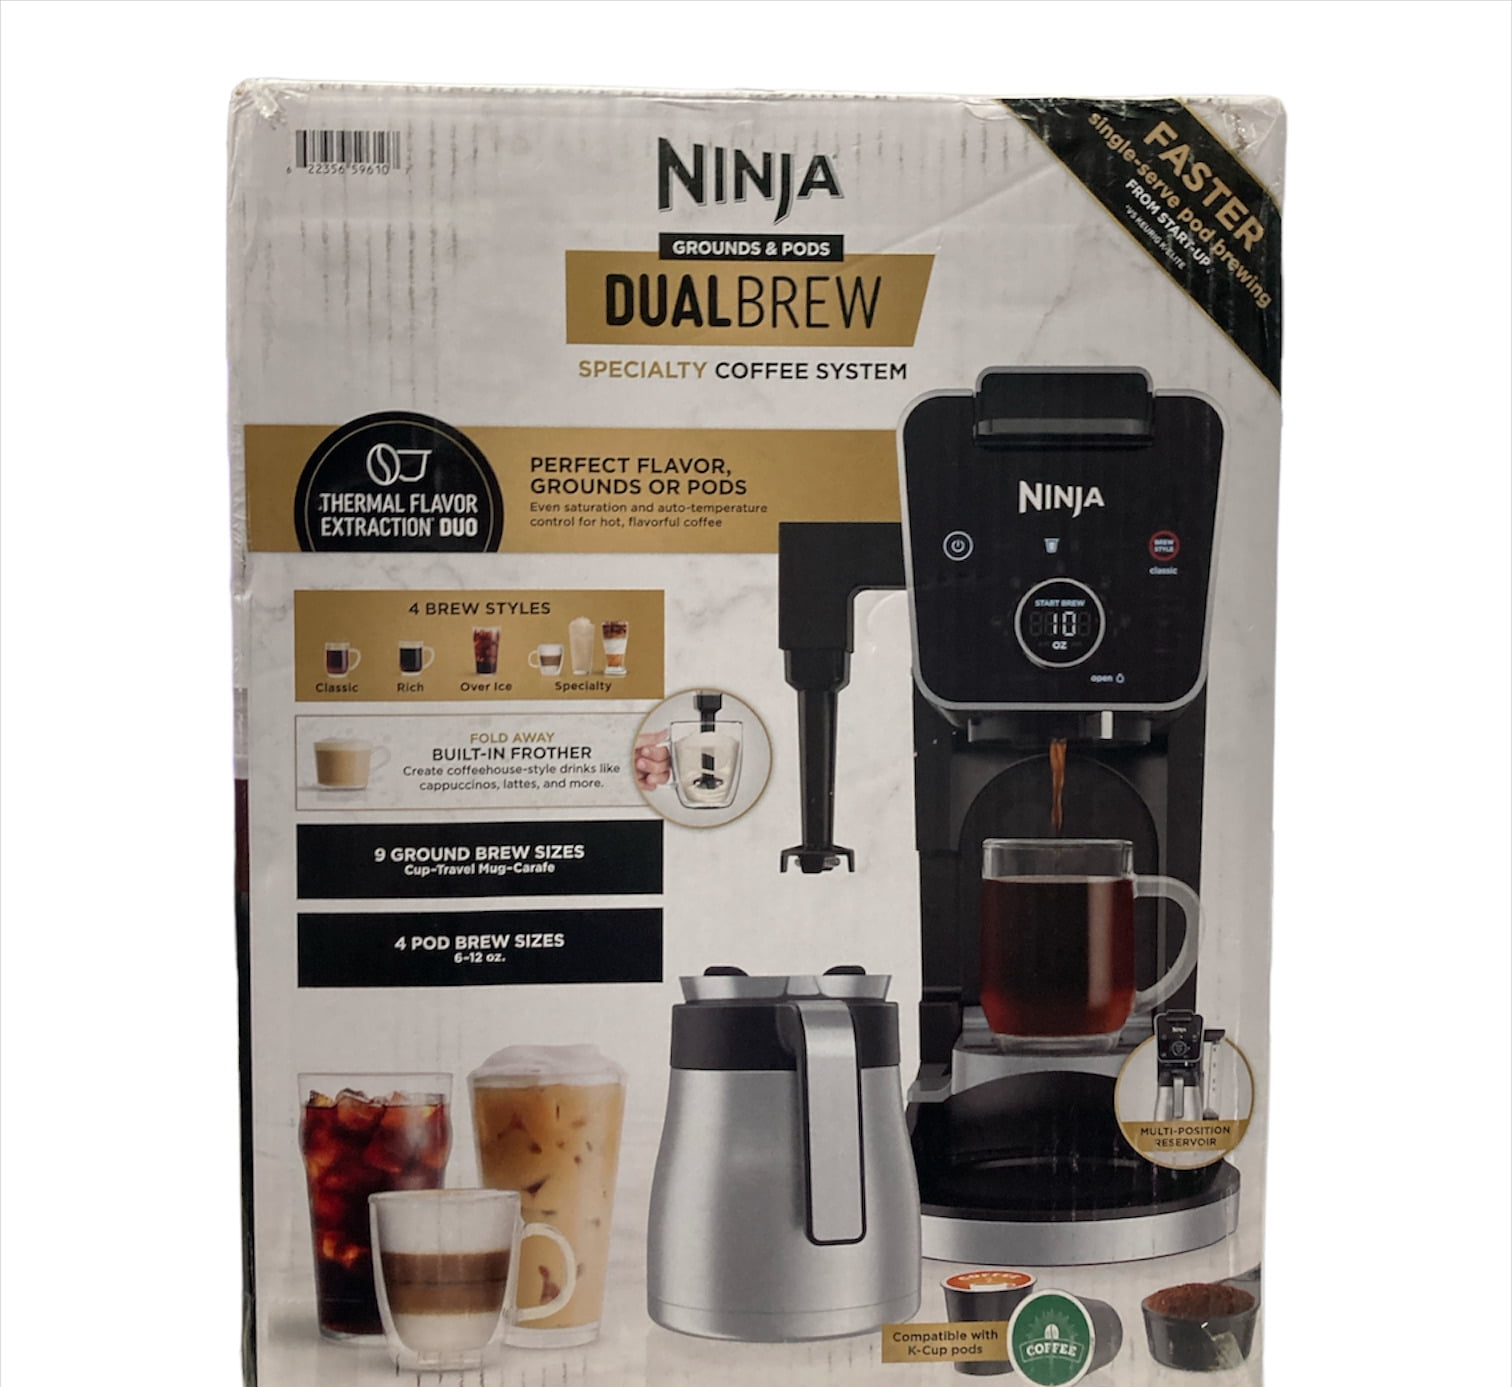 Ninja Ground & Pods DualBrew Pro Specialty Coffee System Maker